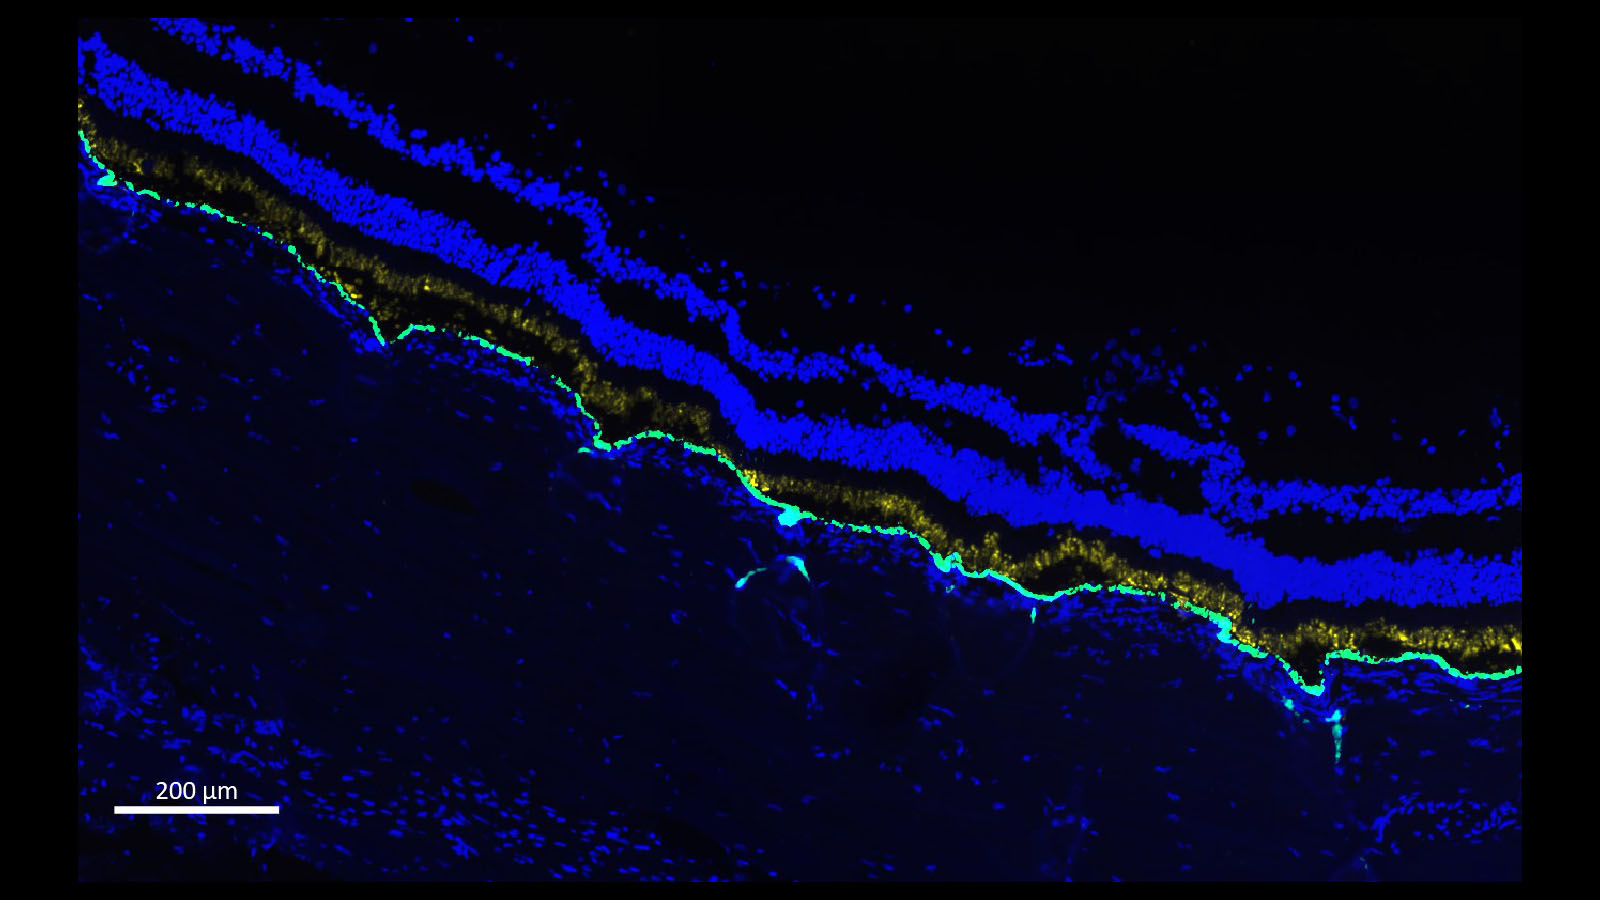 Fluorescent microscopy image of human retina, courtesy of Dr. Angela Kruse of Vanderbilt University